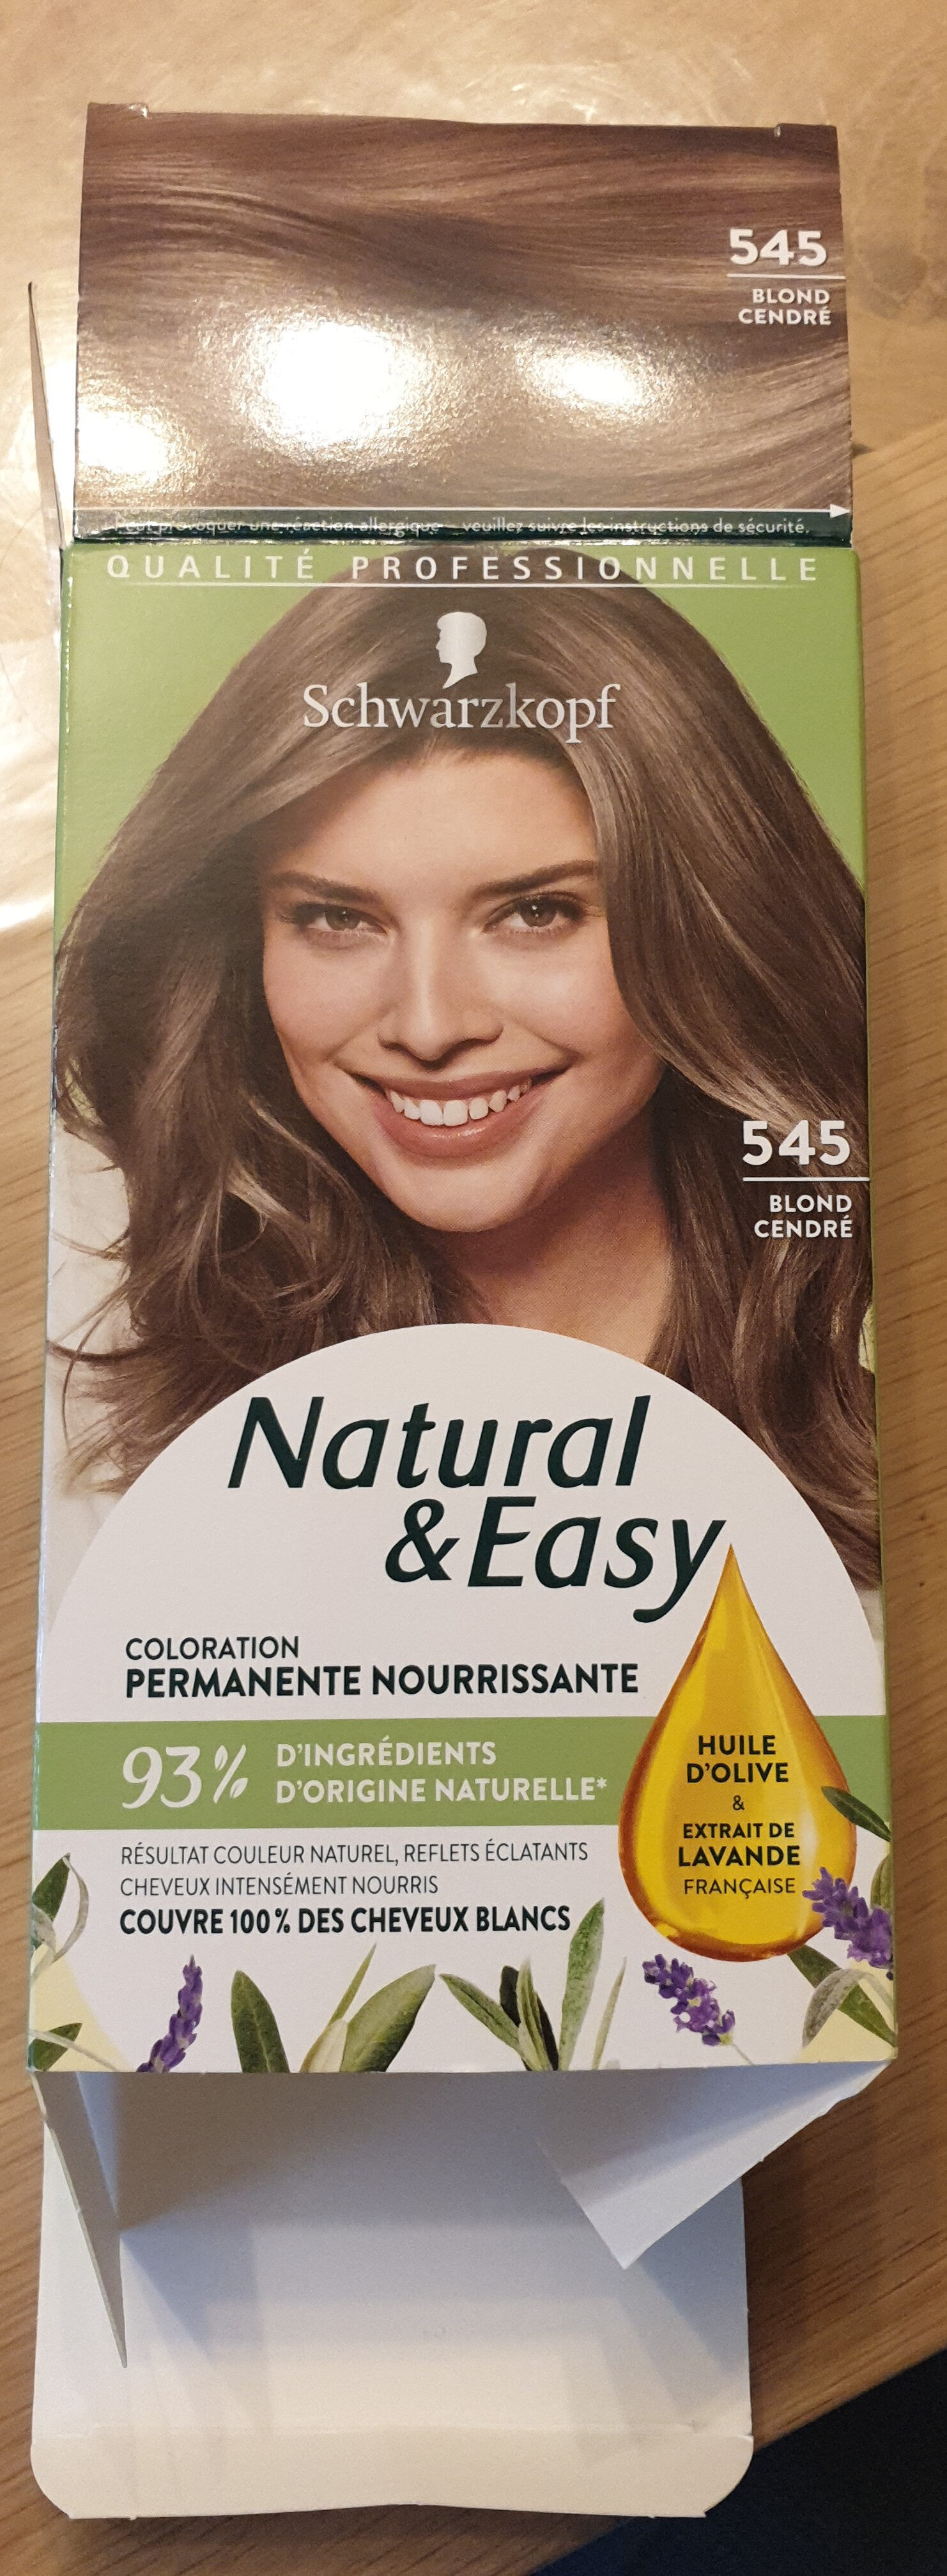 Natural & Easy 545 blond cendré - Produto - fr